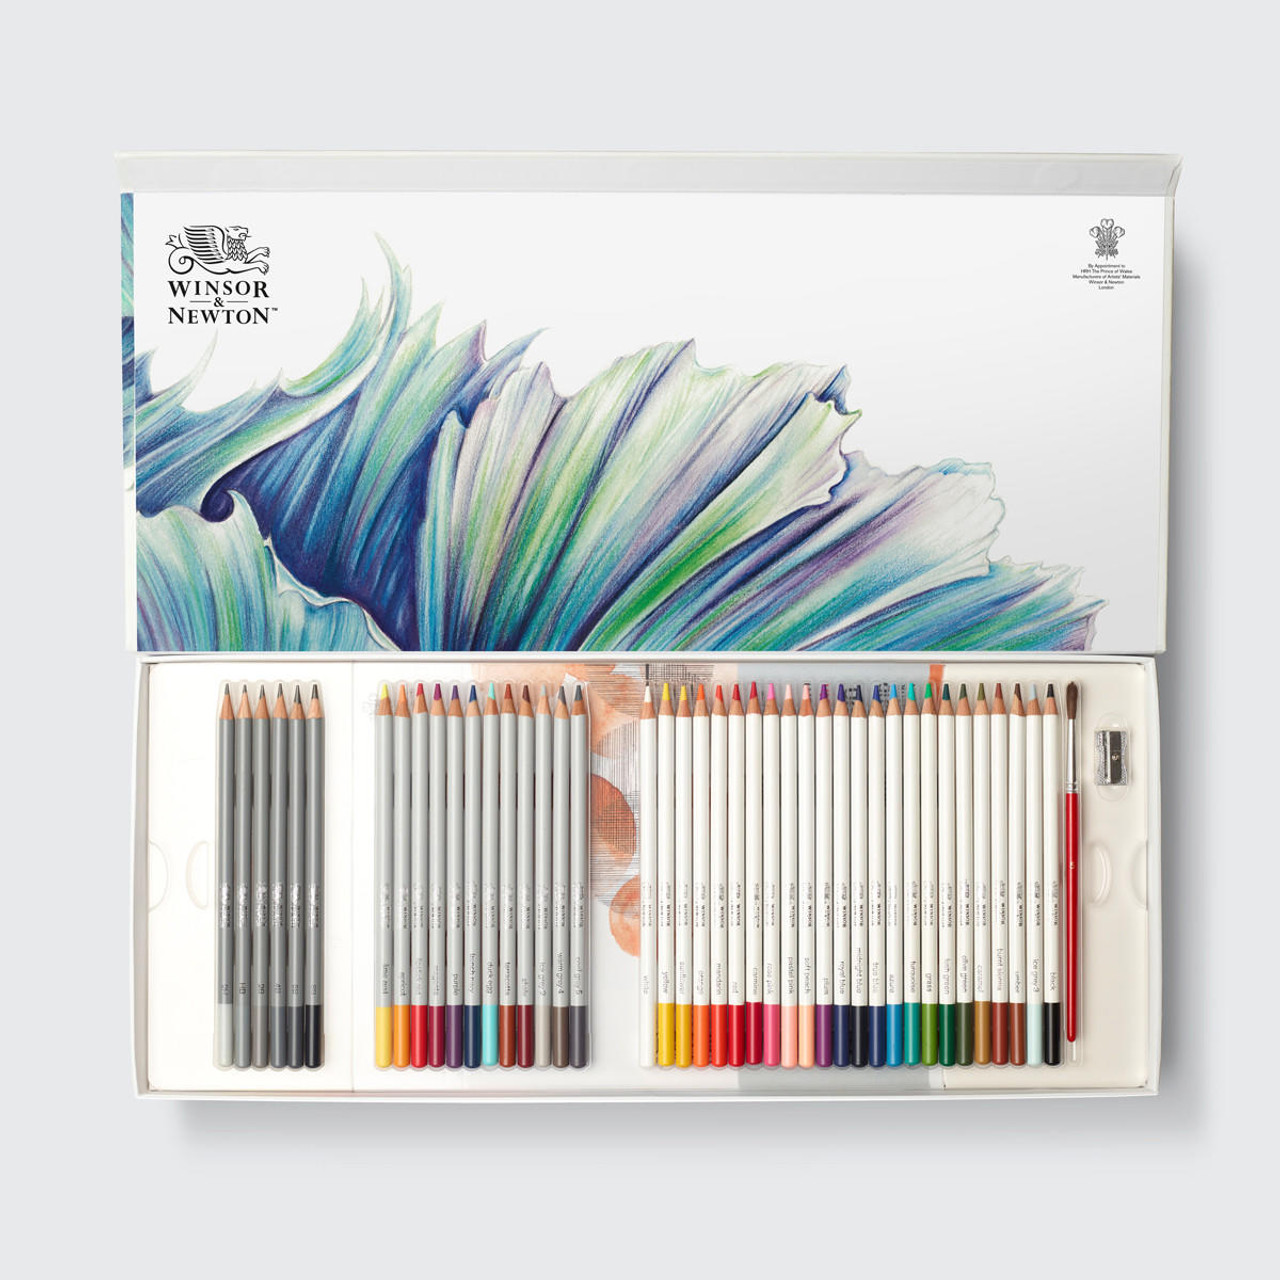 Winsor & Newton Studio Collection Watercolour Pencils Box Set of 50